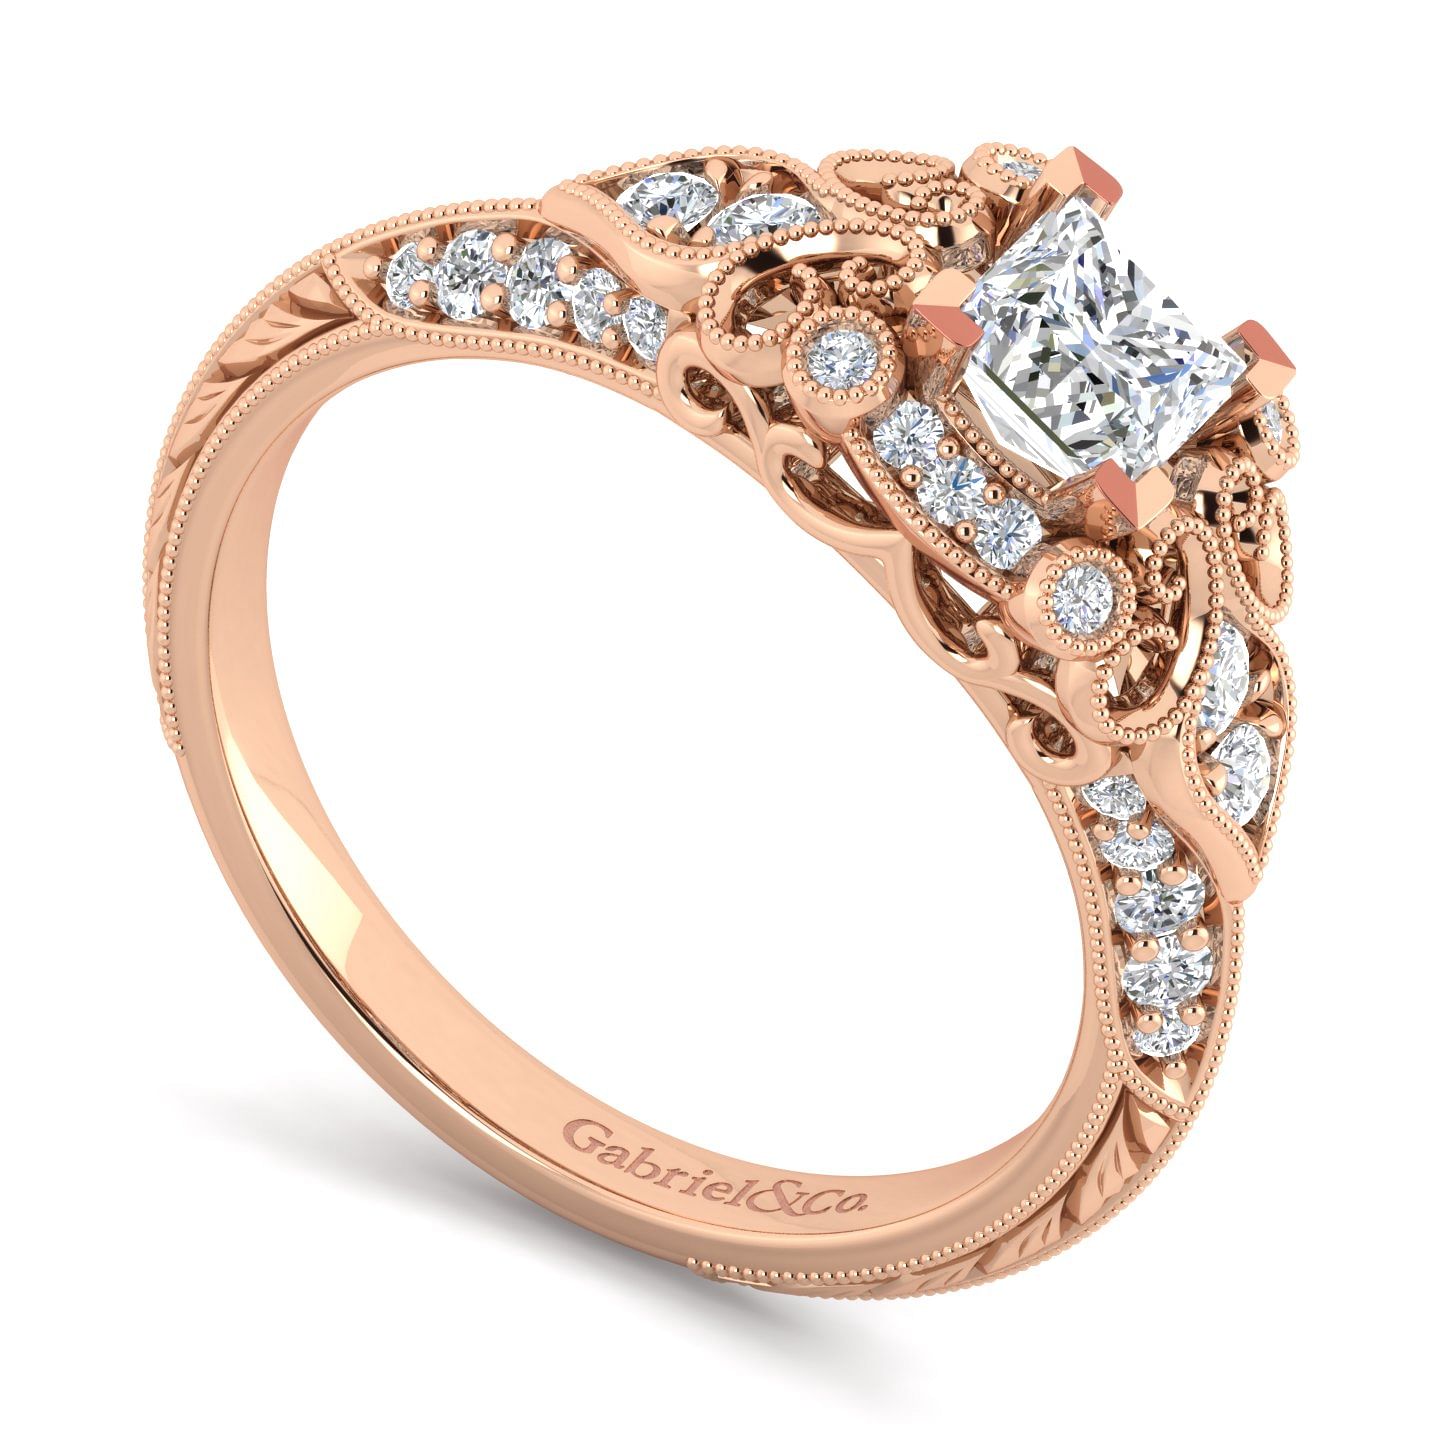 Unique 14K Rose Gold Vintage Inspired Princess Cut Diamond Halo Engagement Ring